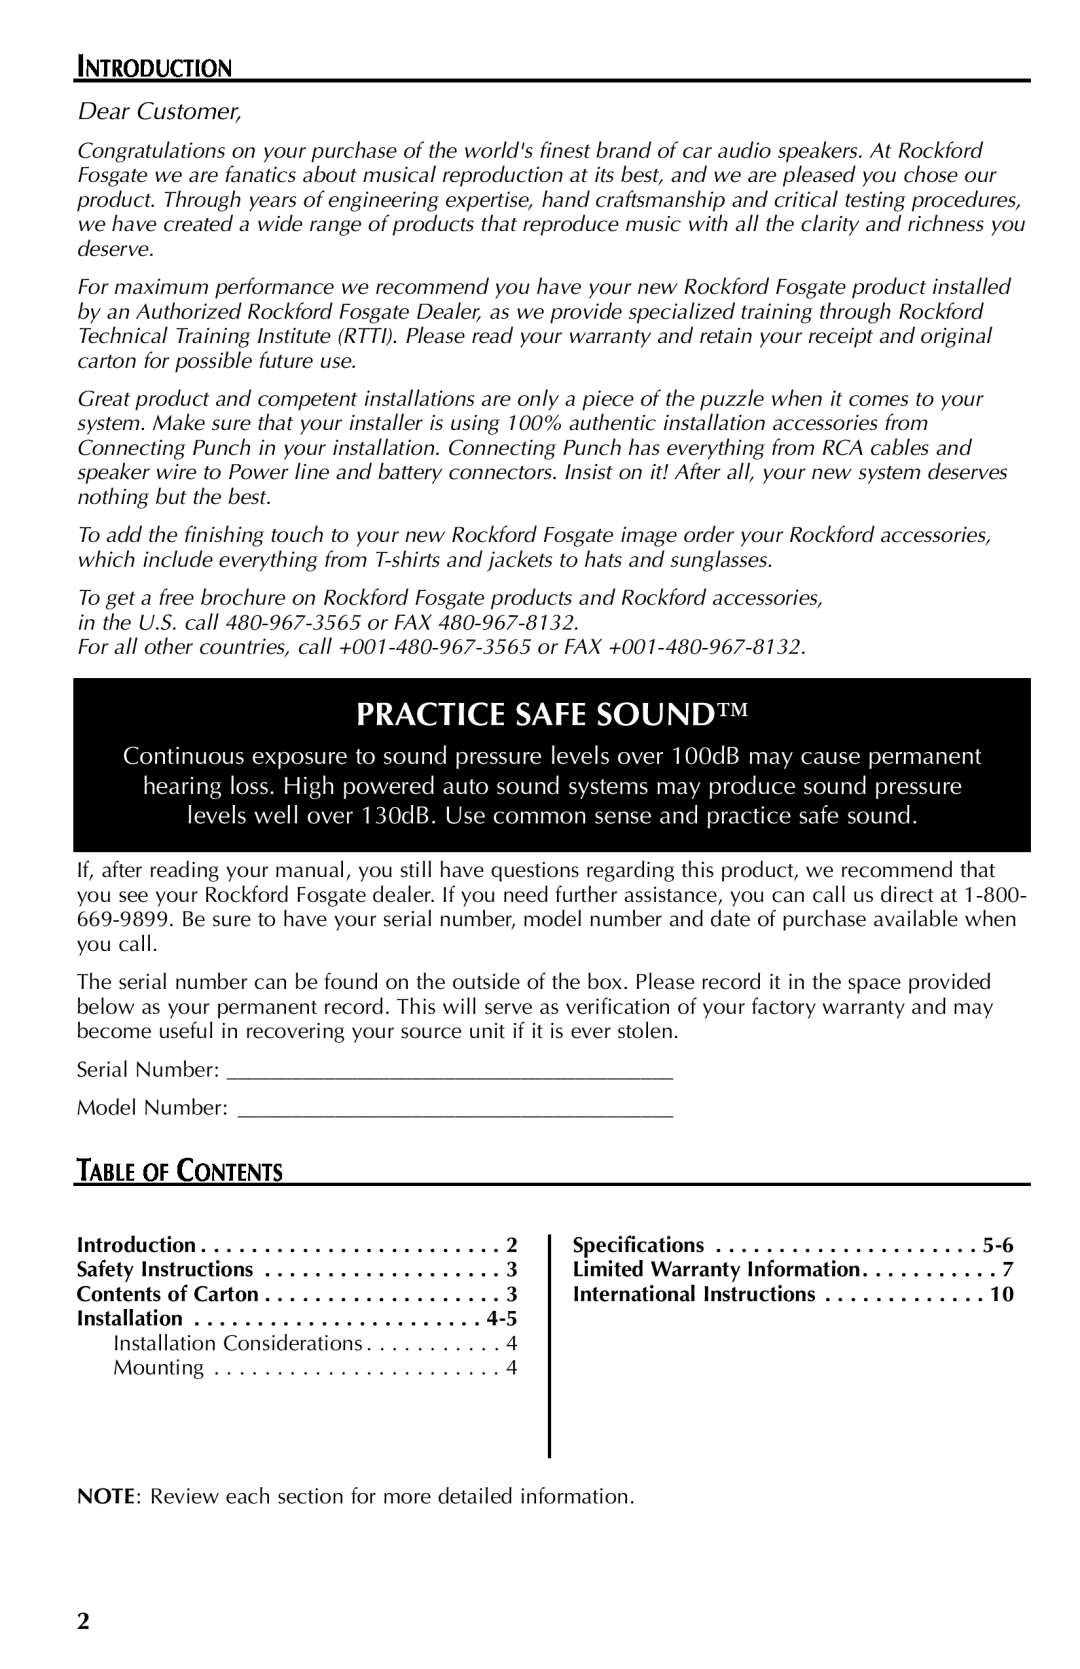 Rockford Fosgate FRC3206U Practice Safe Sound, Introduction, Dear Customer, Table Of Contents, International Instructions 